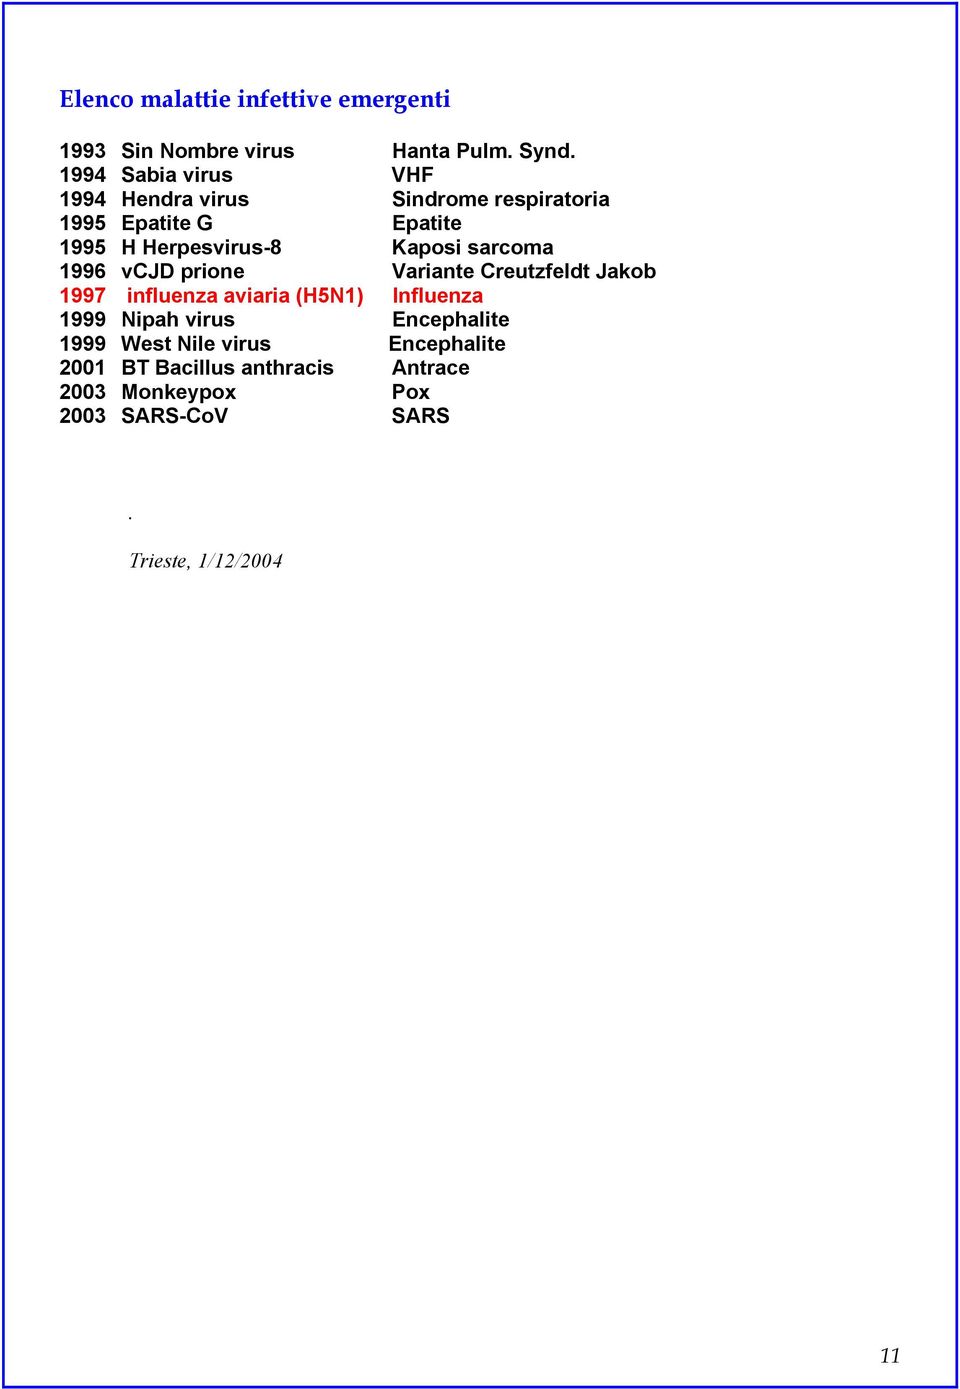 Kaposi sarcoma 1996 vcjd prione Variante Creutzfeldt Jakob 1997 influenza aviaria (H5N1) Influenza 1999